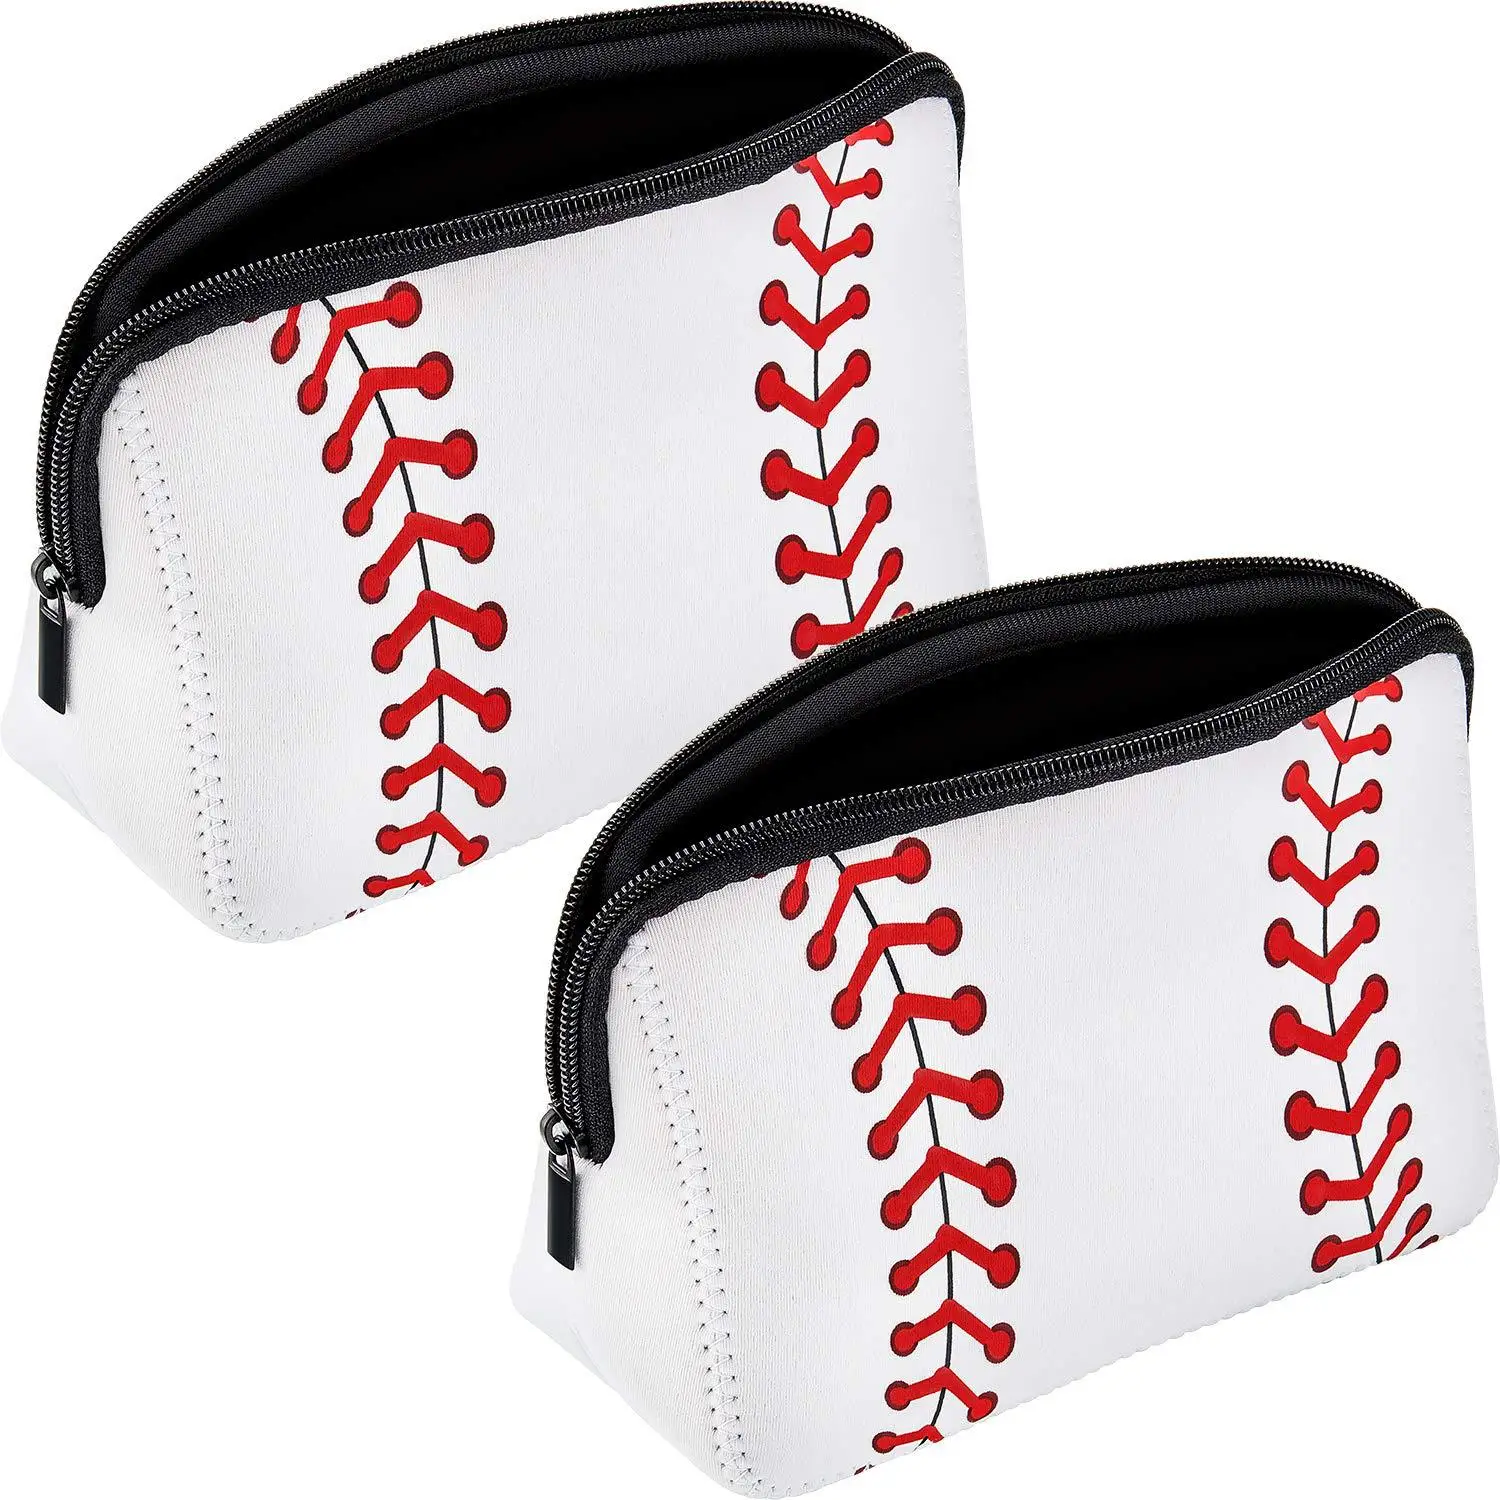 

Baseball printed with zipper white makeup bag waterproof softball travel girls neoprene storage cosmetic bag, Picture shows